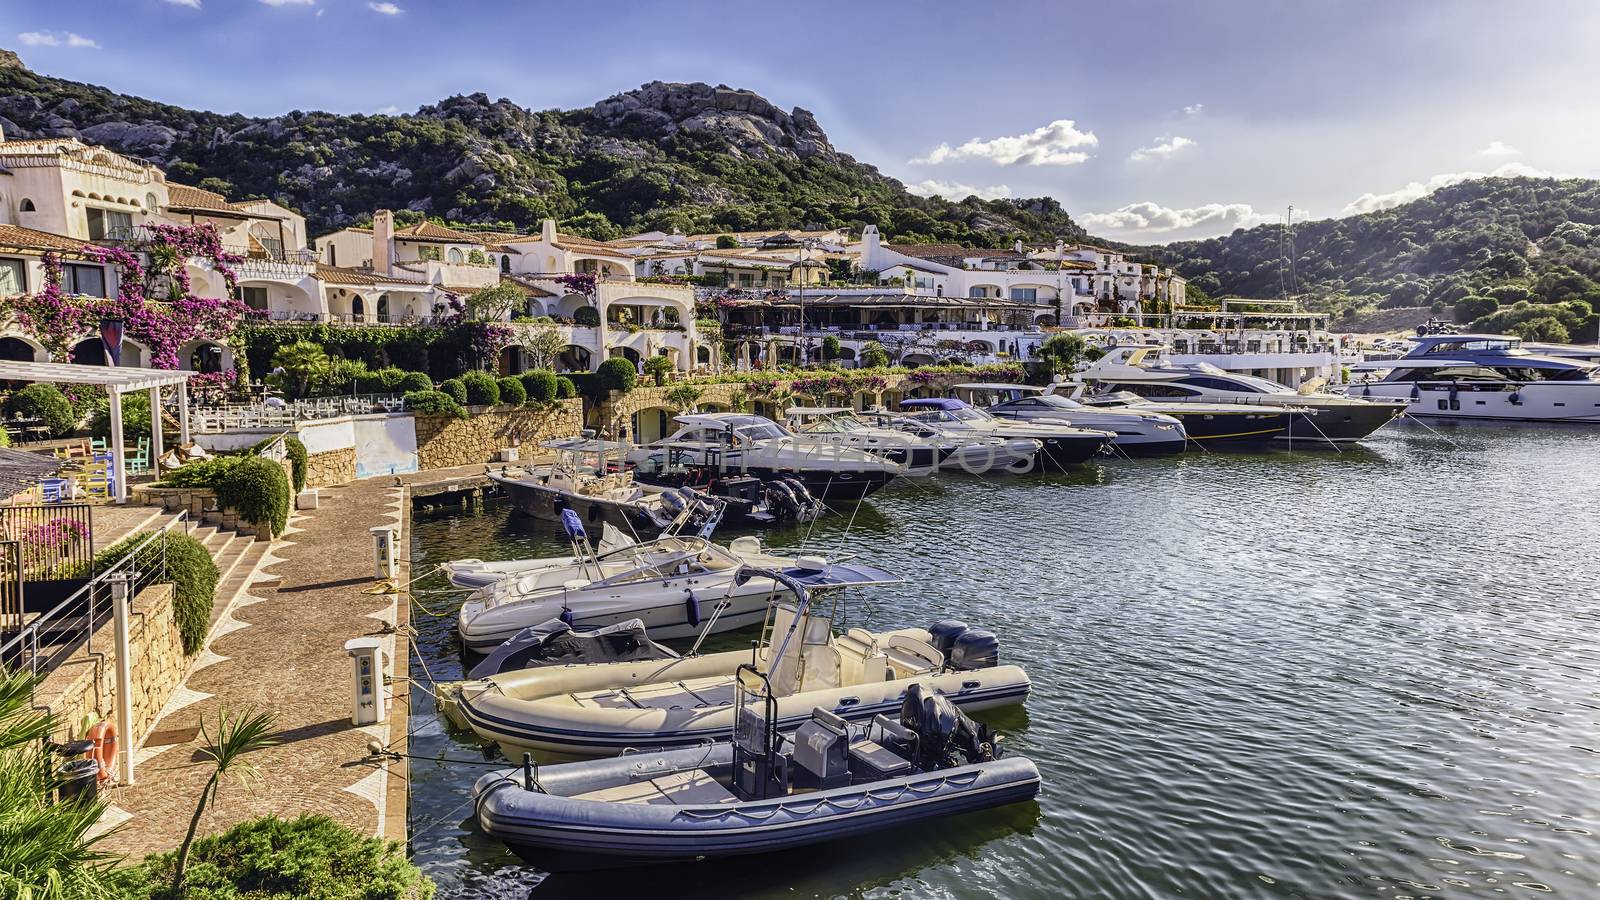 The scenic harbor of Poltu Quatu, Costa Smeralda, Sardinia, Ital by marcorubino